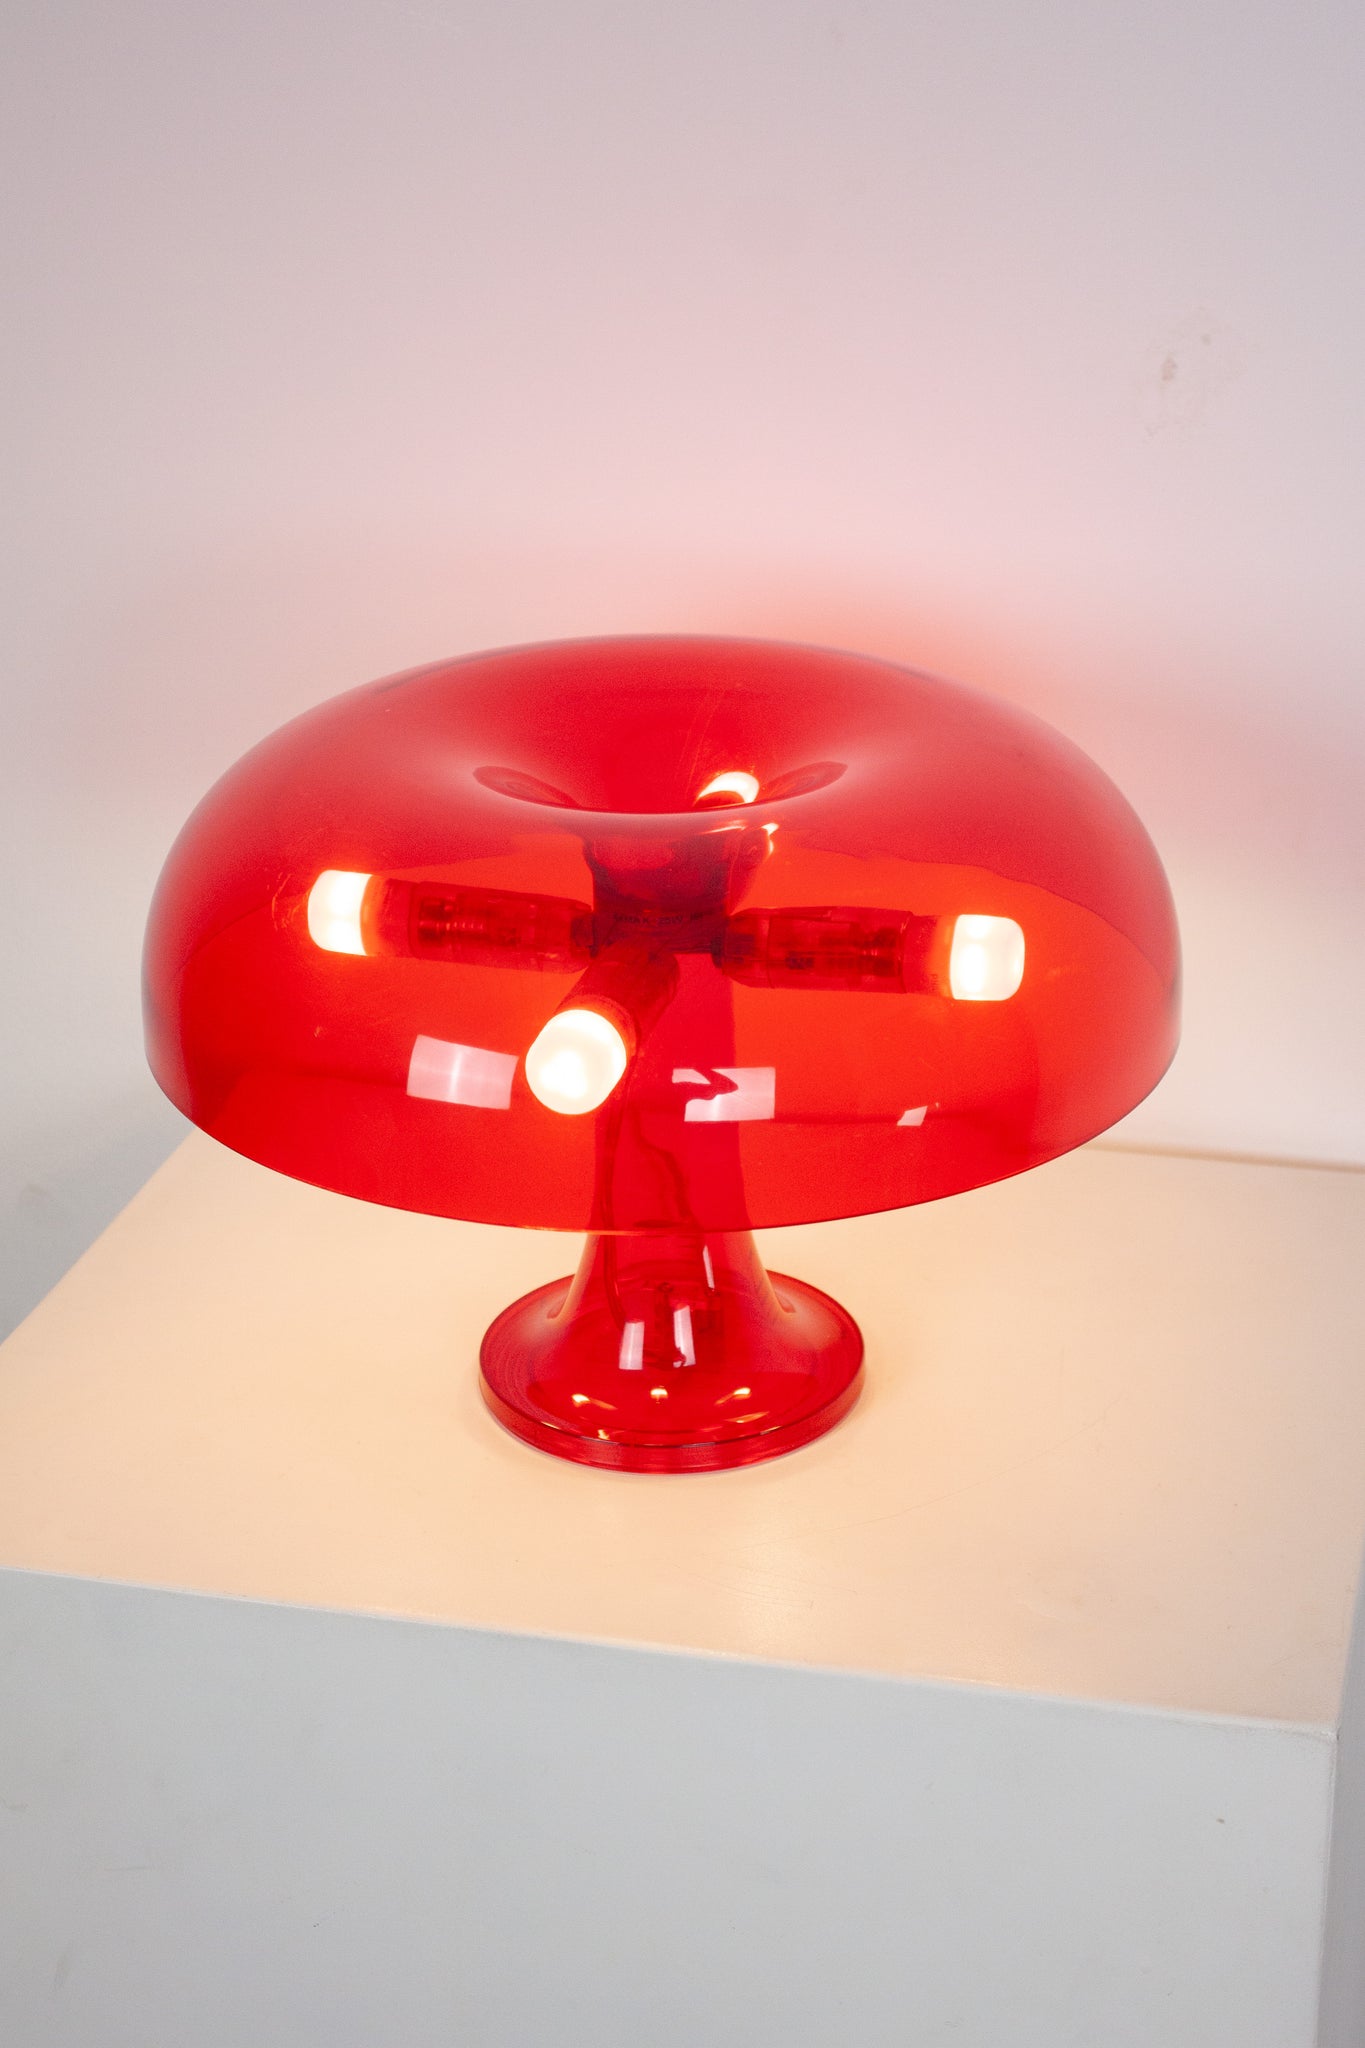 Artemide Nessino Table Lamp by Giancarlo Mattioli (Translucent Red)